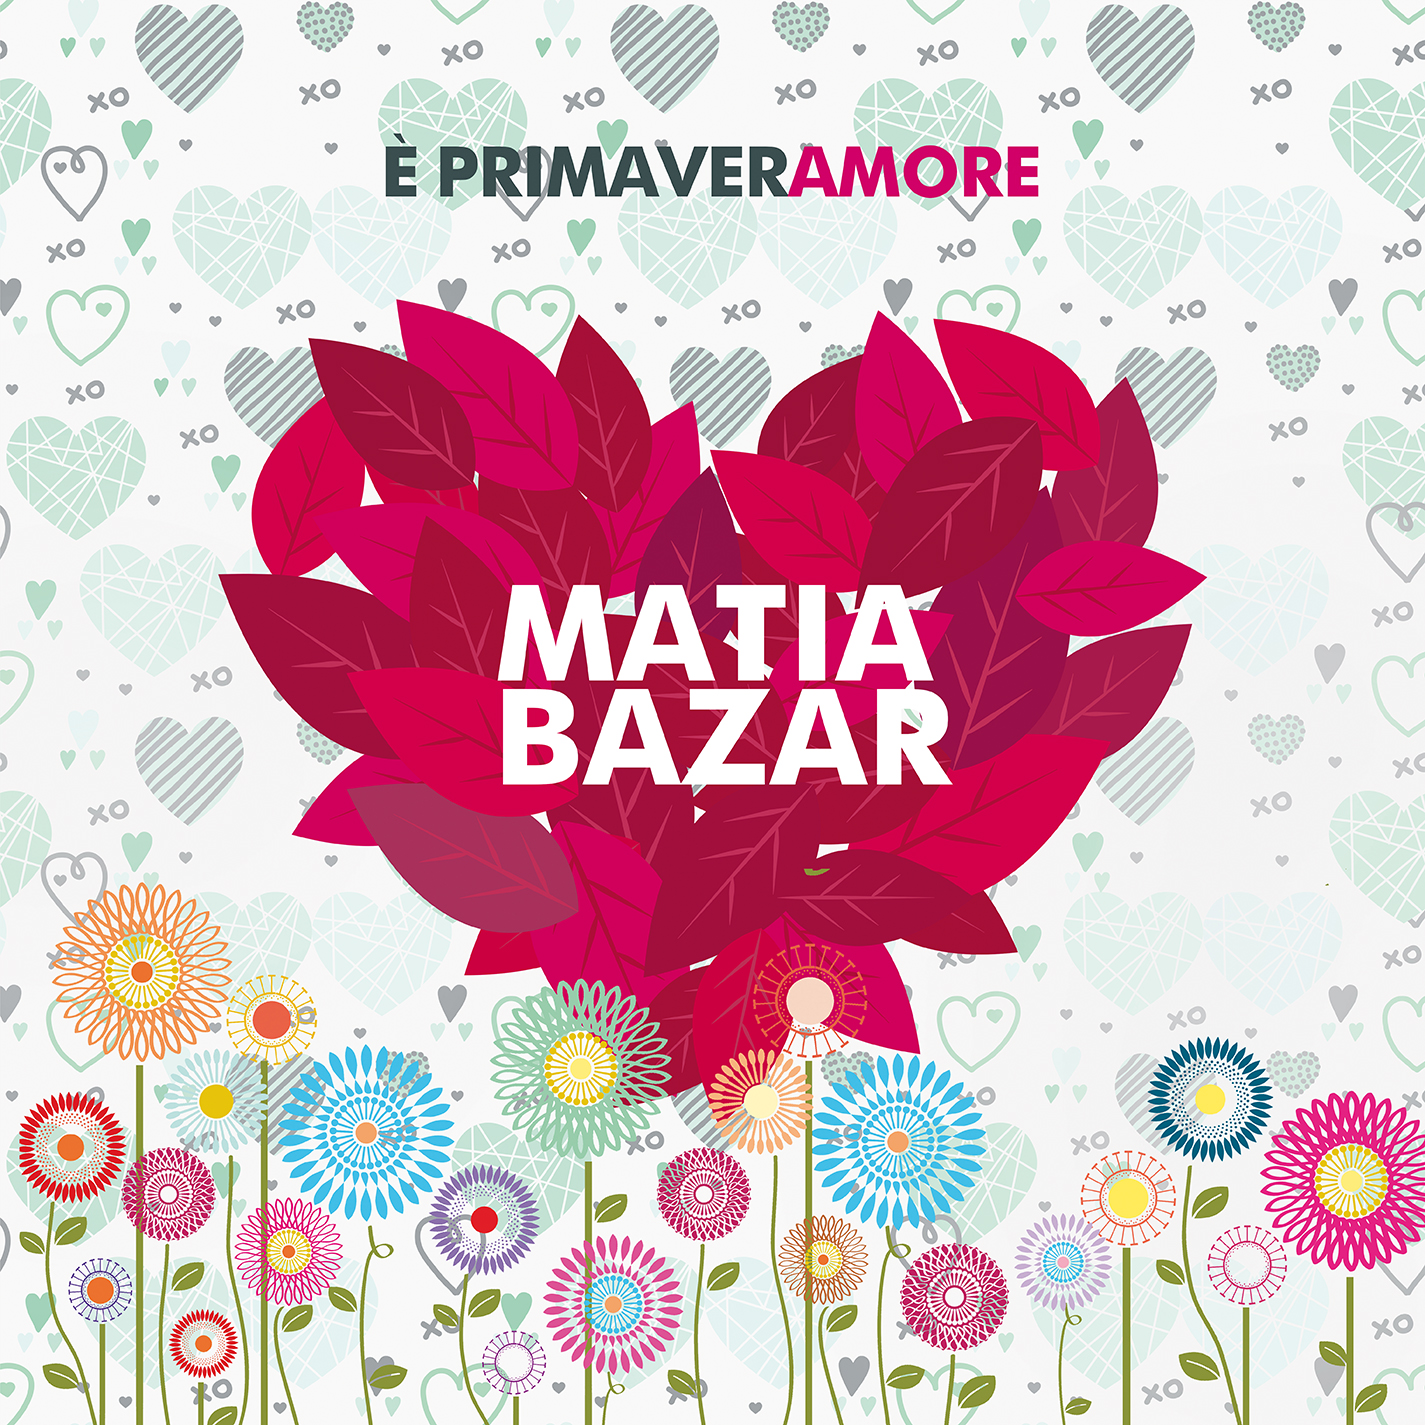 Matia Bazar - è primaveramore